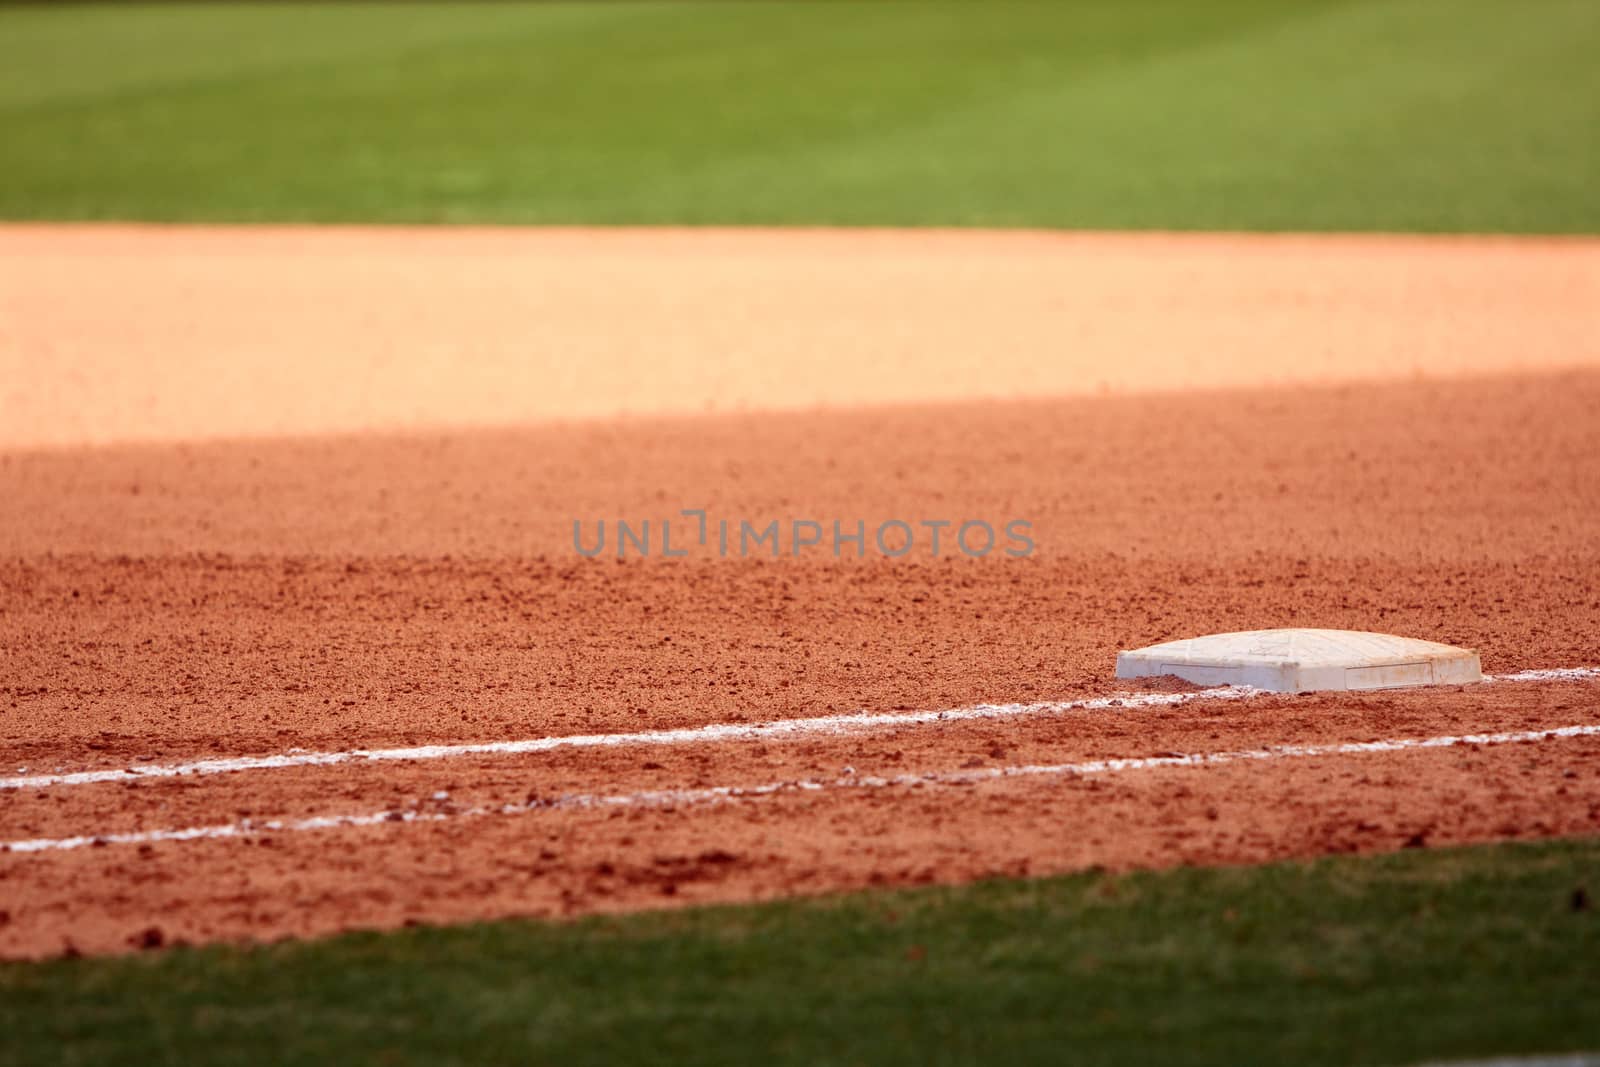 First Base Featured In Empty Baseball Field by BluIz60